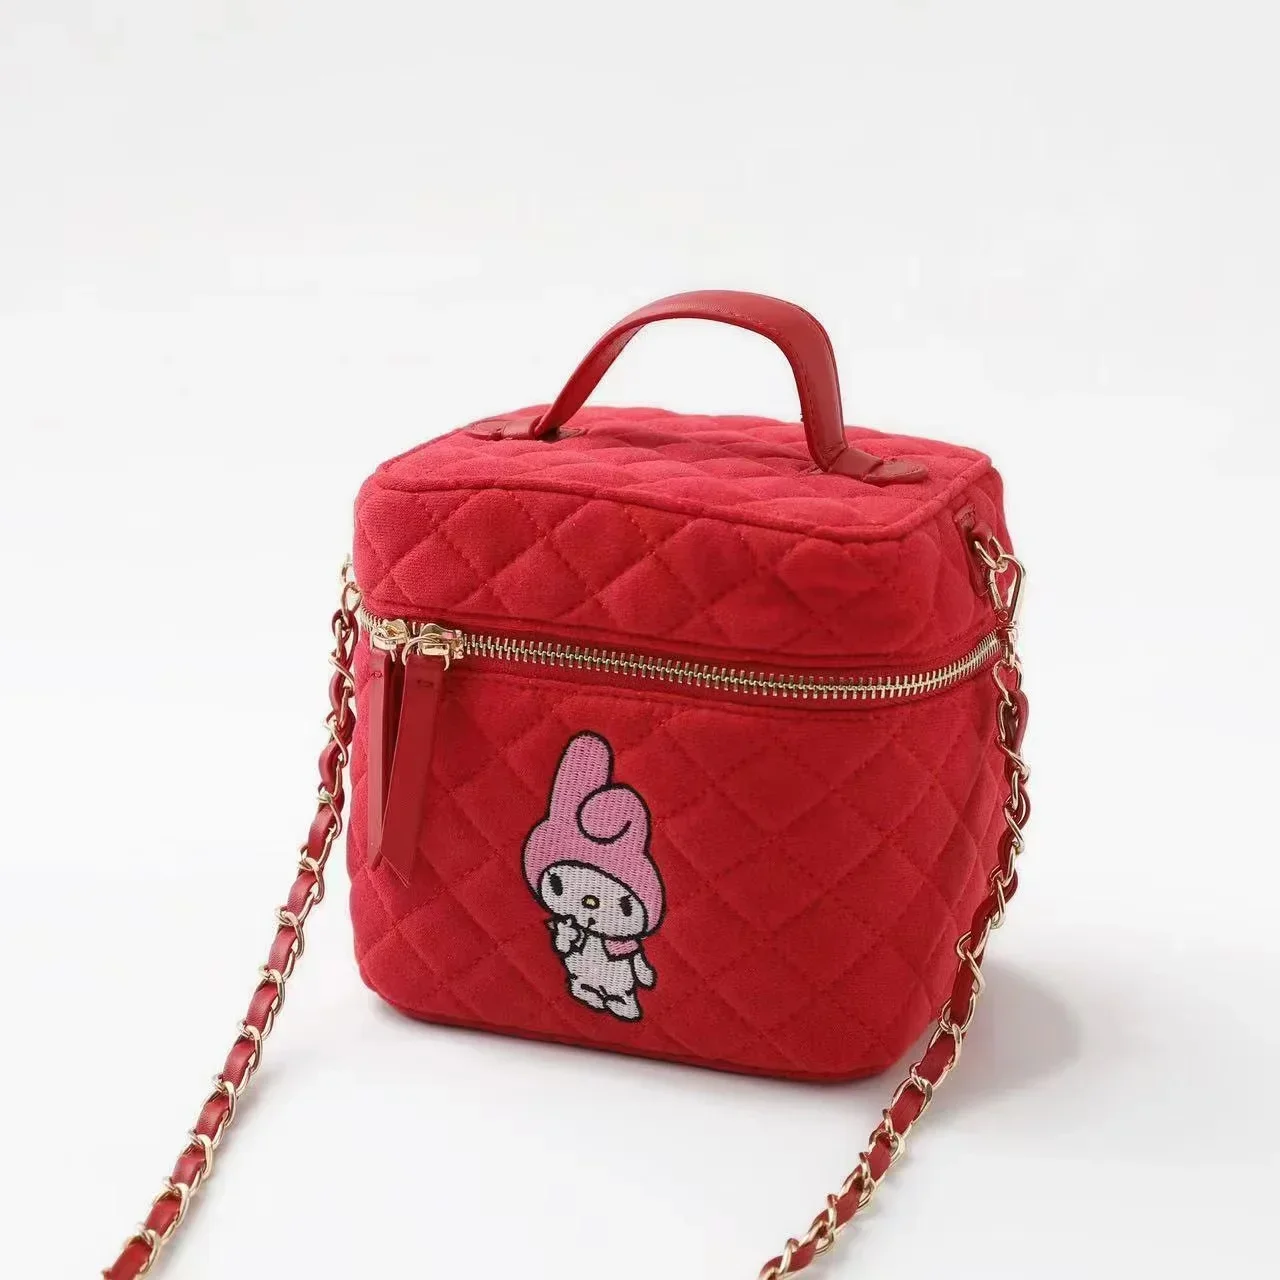 Hello Kitty Purses and Handbags Sanrio Messenger Bag Shoulder Bags for W... - $98.29